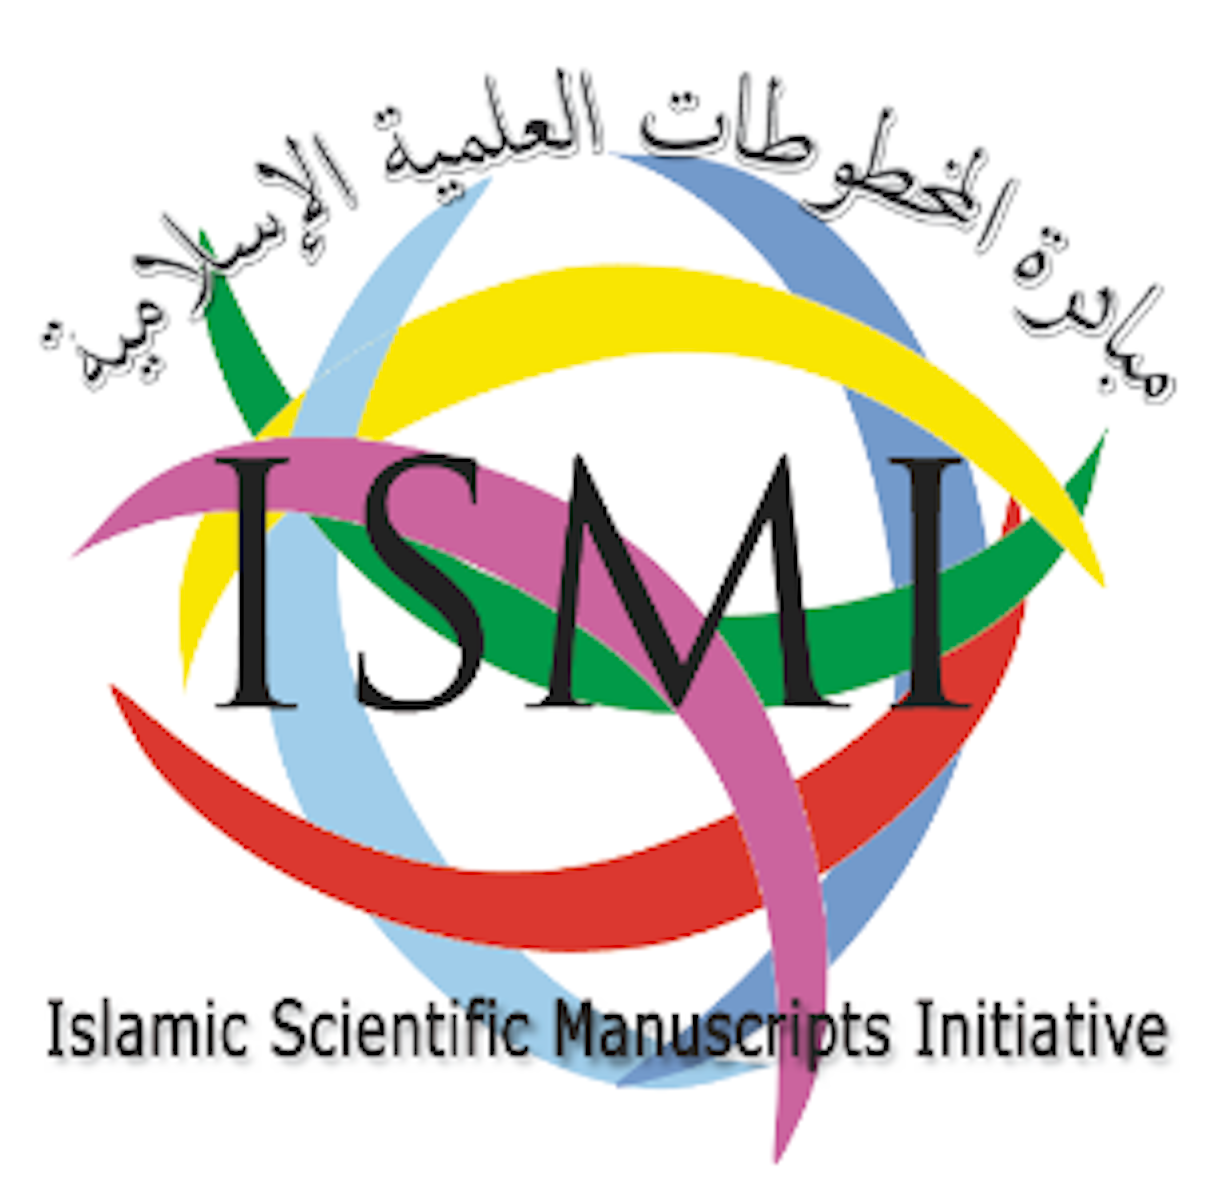 Islamic Scientific Manuscripts Initiative logo